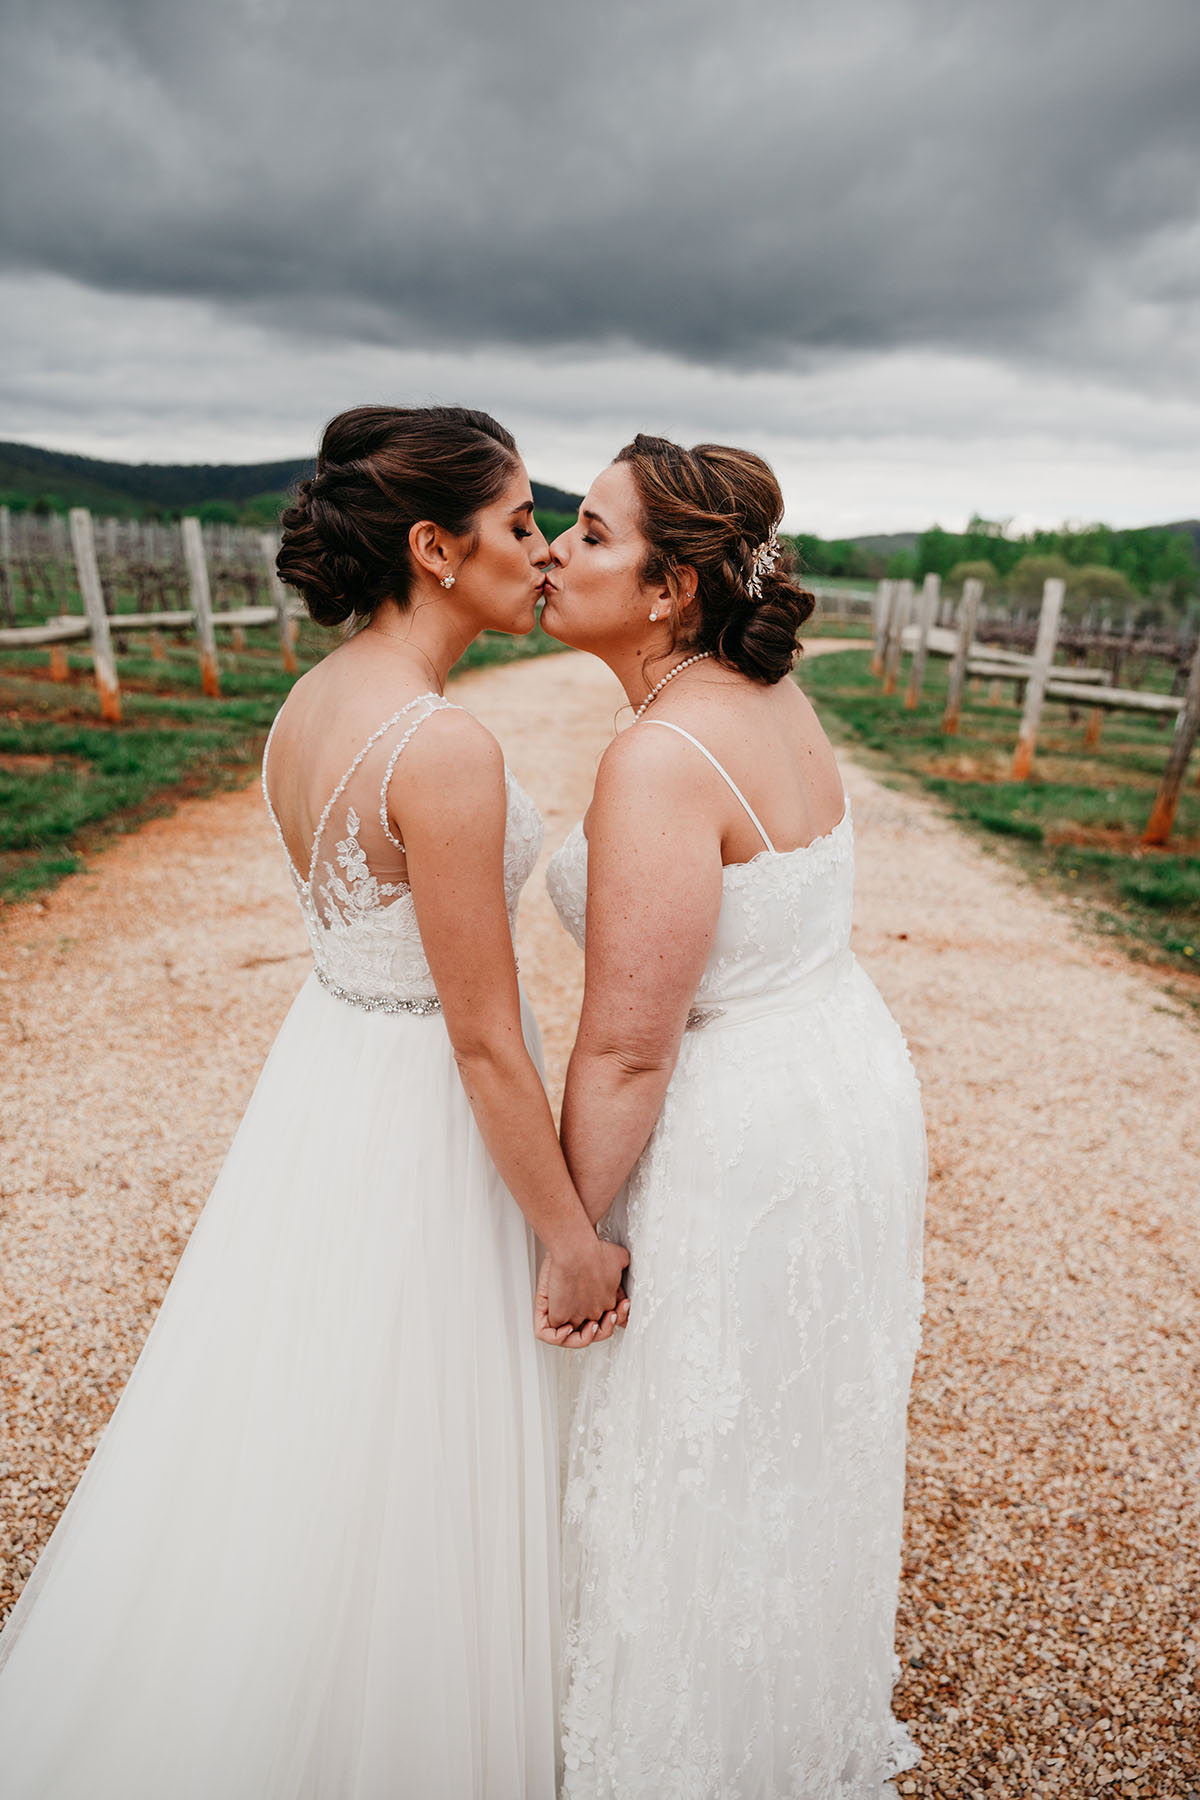 Vintage, romantic vineyard wedding two brides lesbian updos buns white dresses pearlskiss